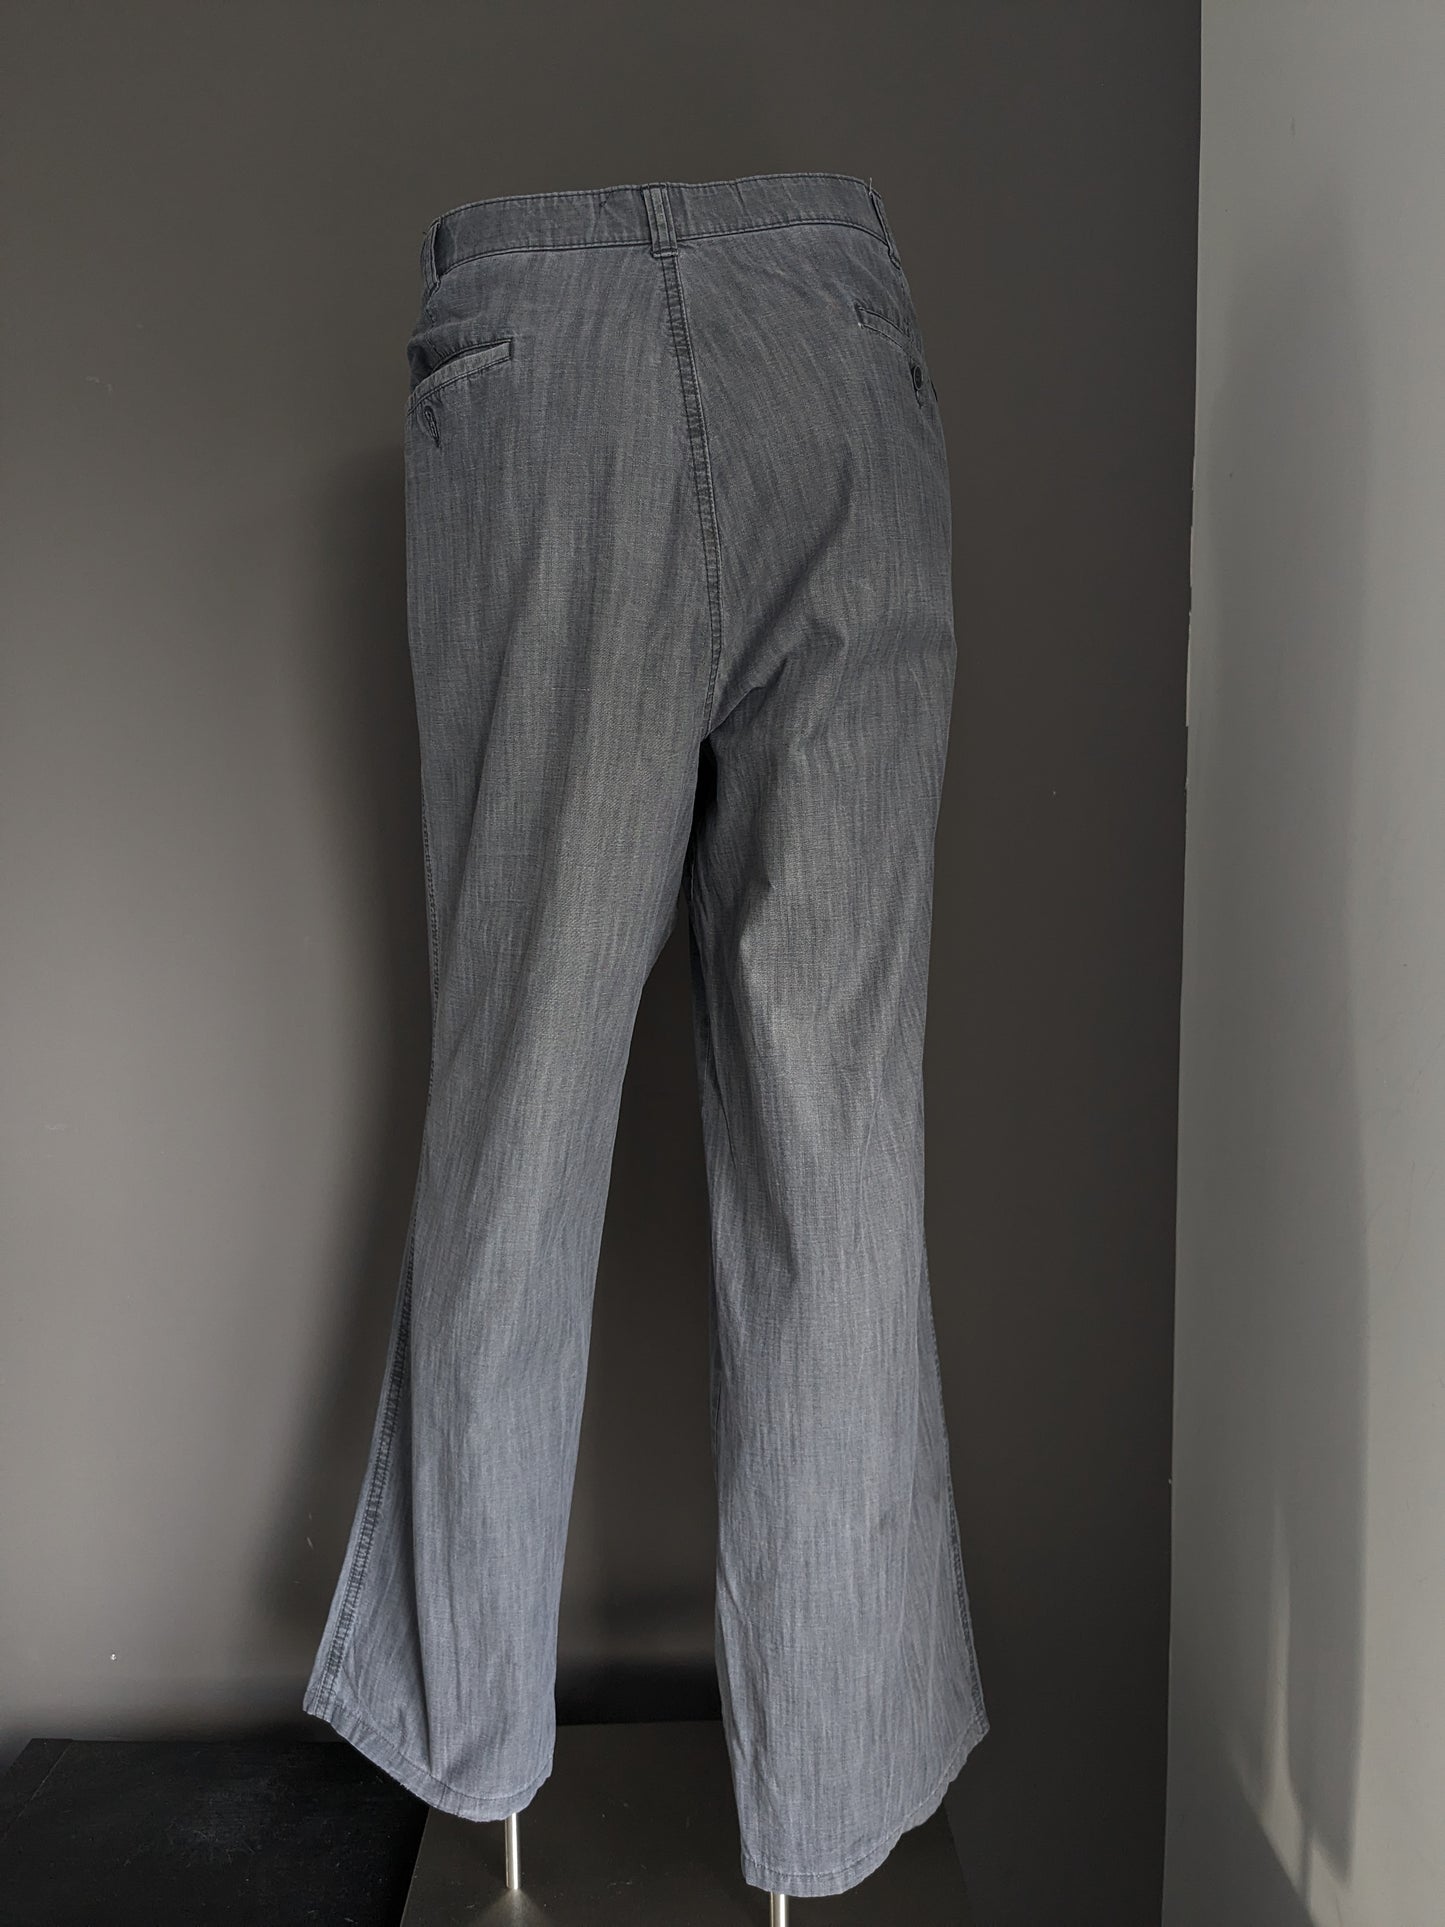 Club or comfort trousers / pants. Gray motif. Size 29 (58 / 2XL / XXL)